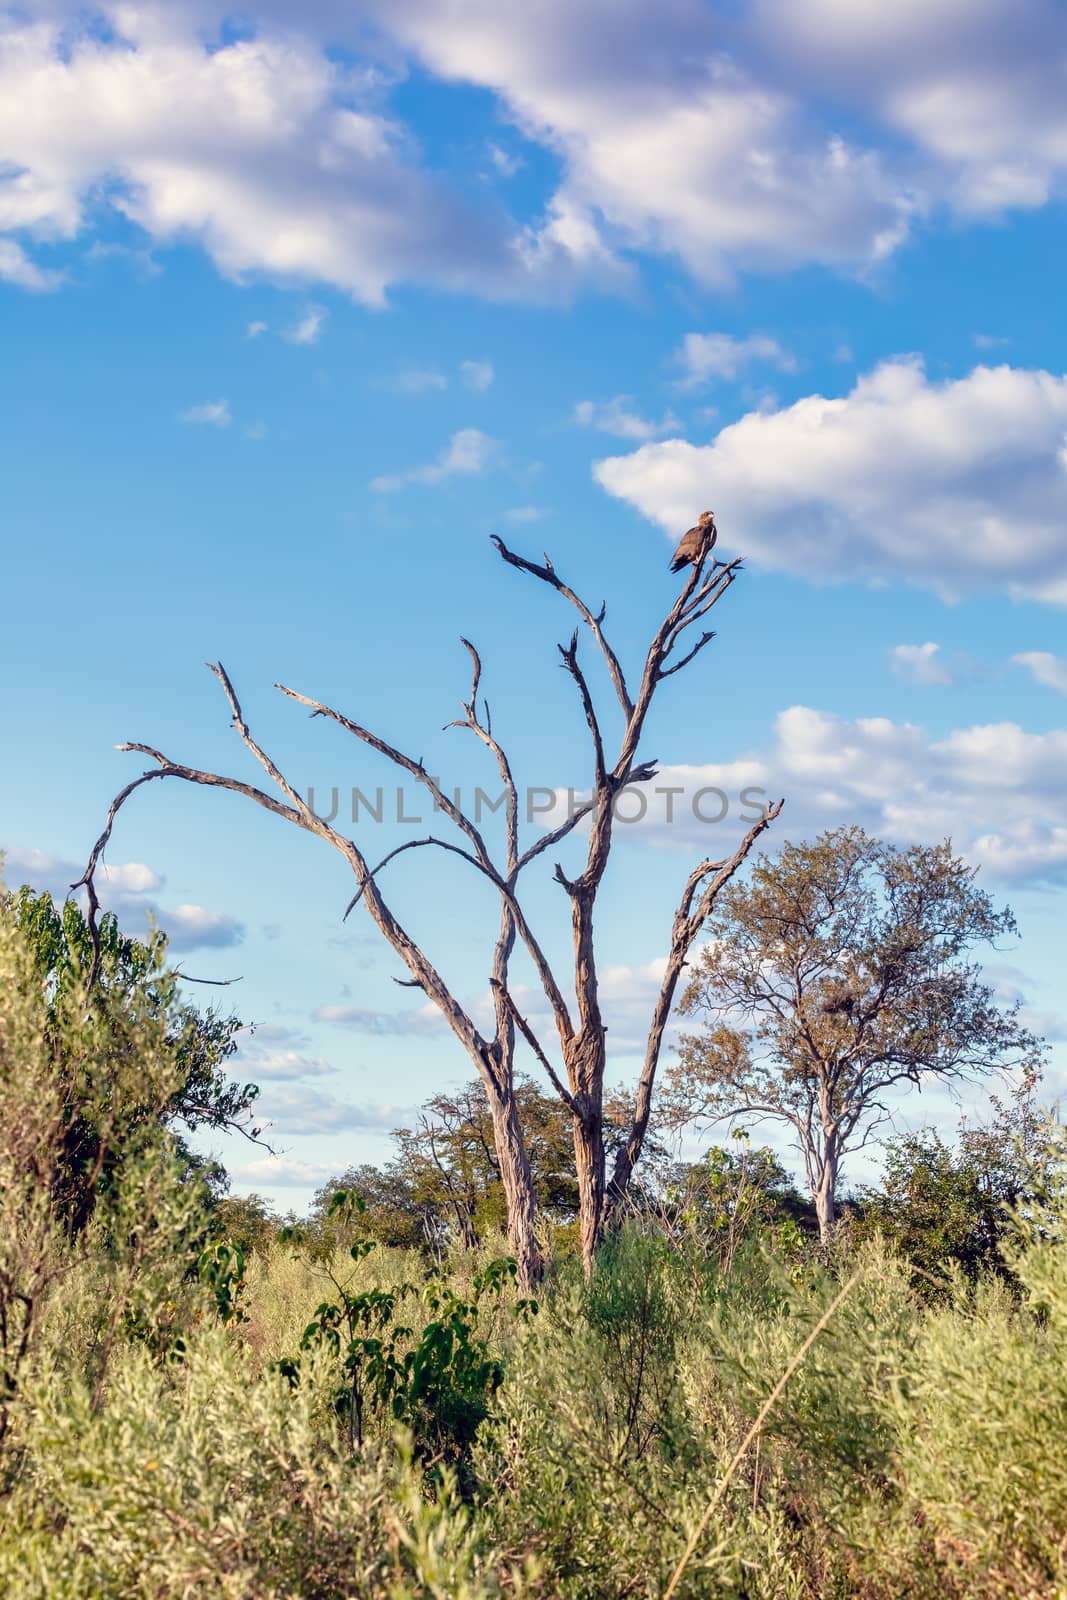 tawny eagle (Aquila rapax), large bird of prey in natural habitat, Moremi game reserve, Botswana Africa safari wildlife